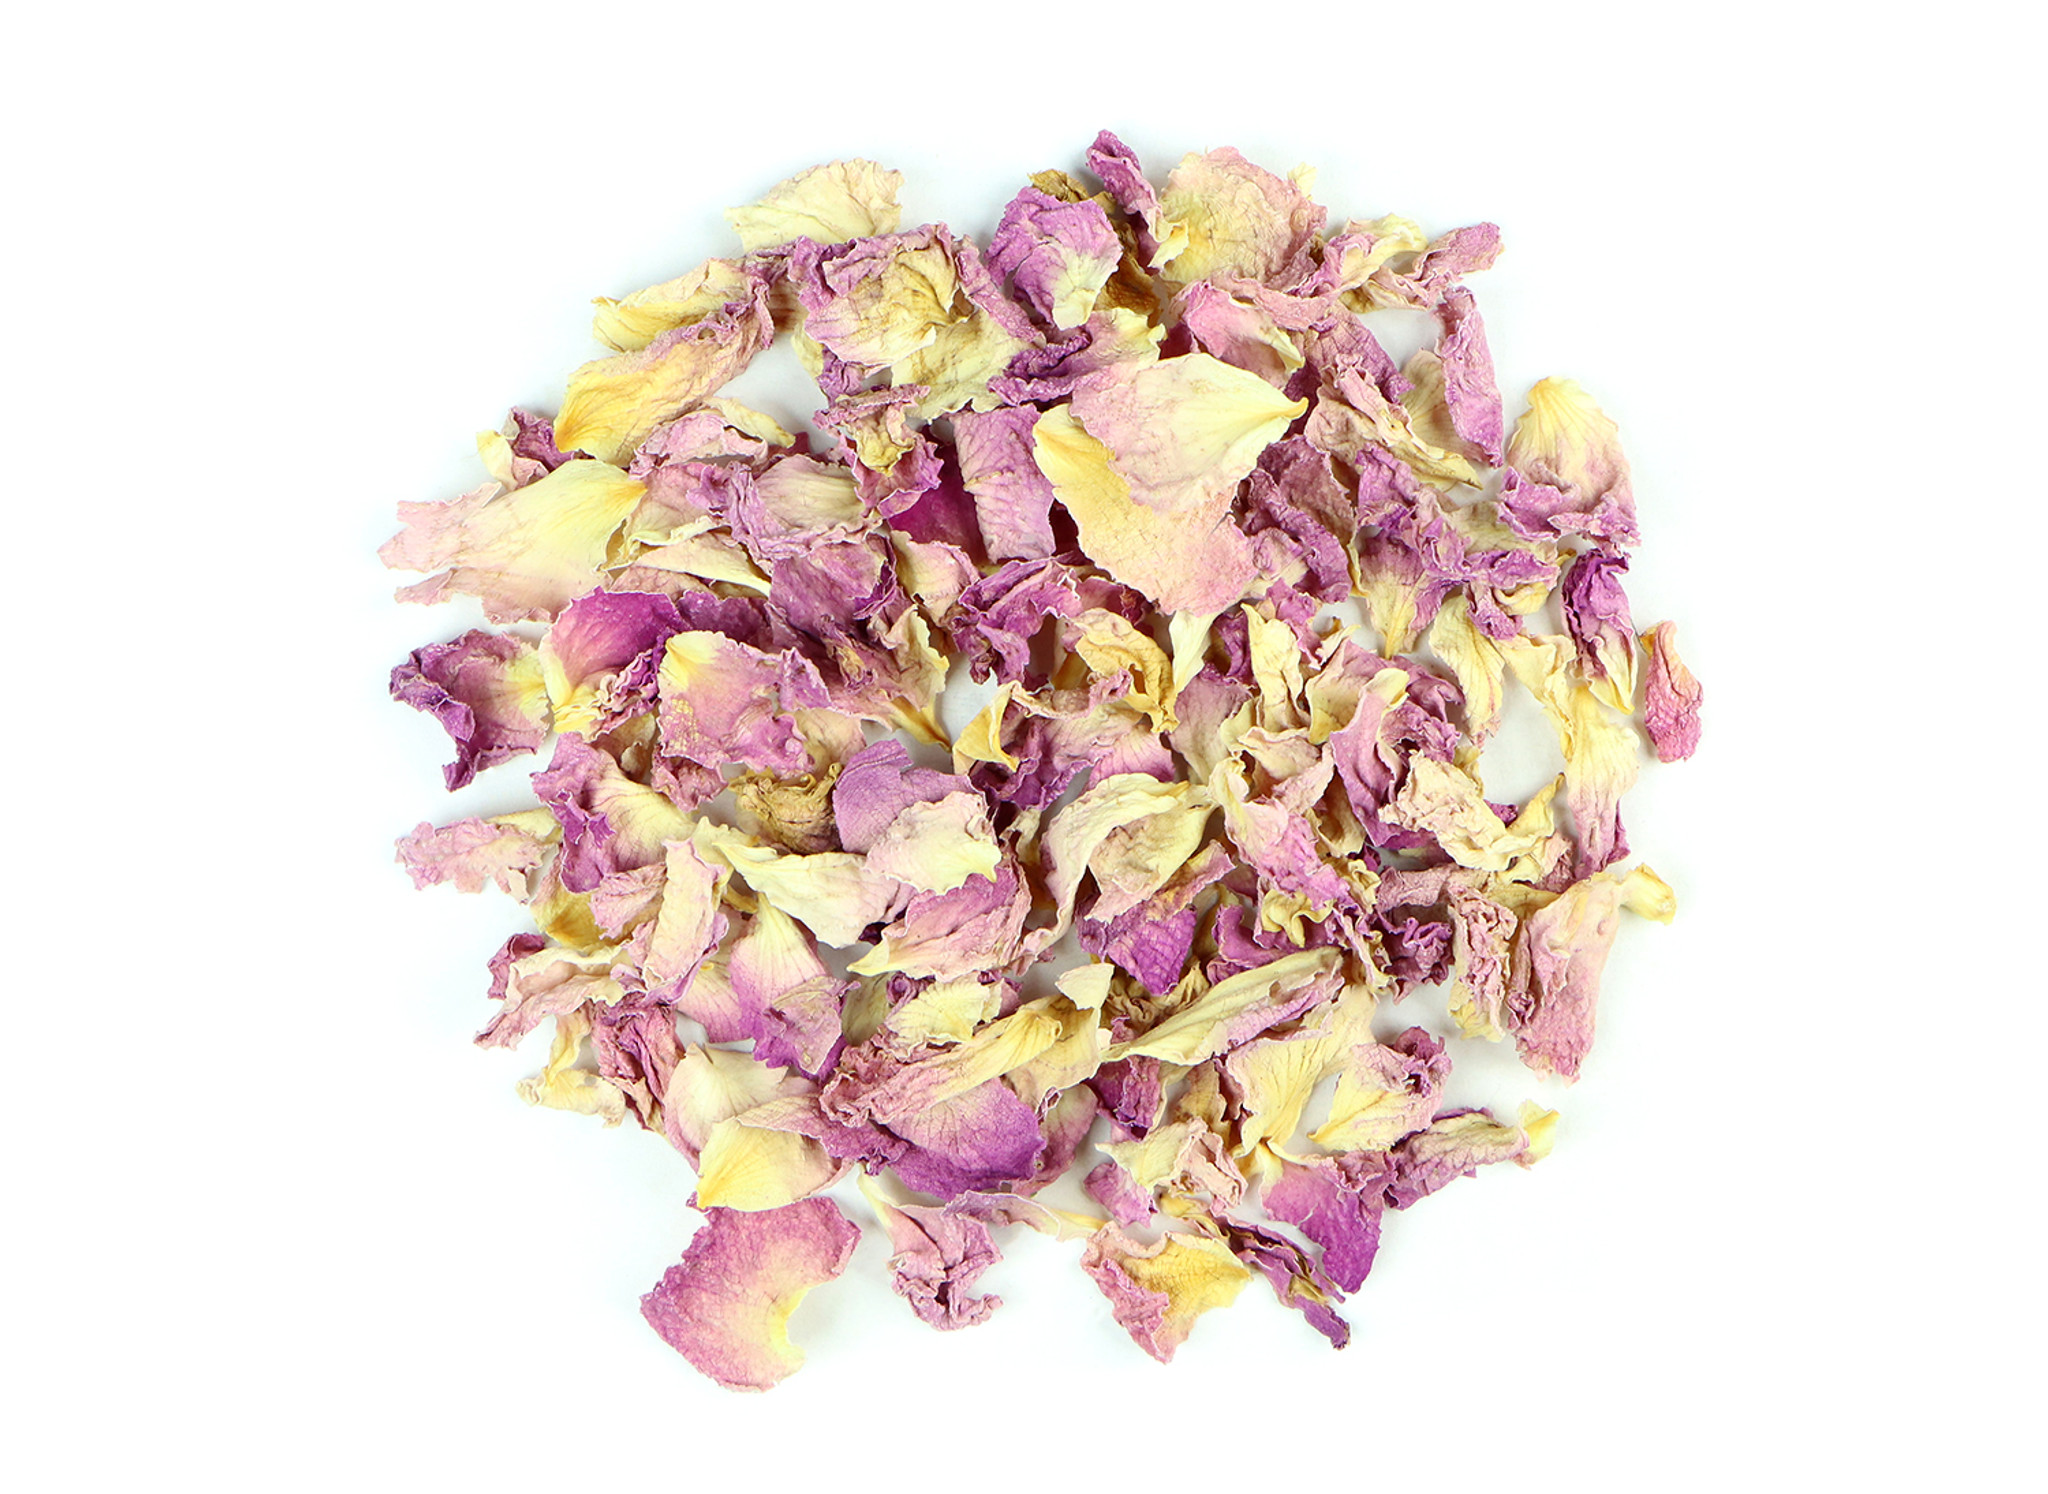 Drying Rose Petals  Natural body care recipes, Dried rose petals, Body  care recipes